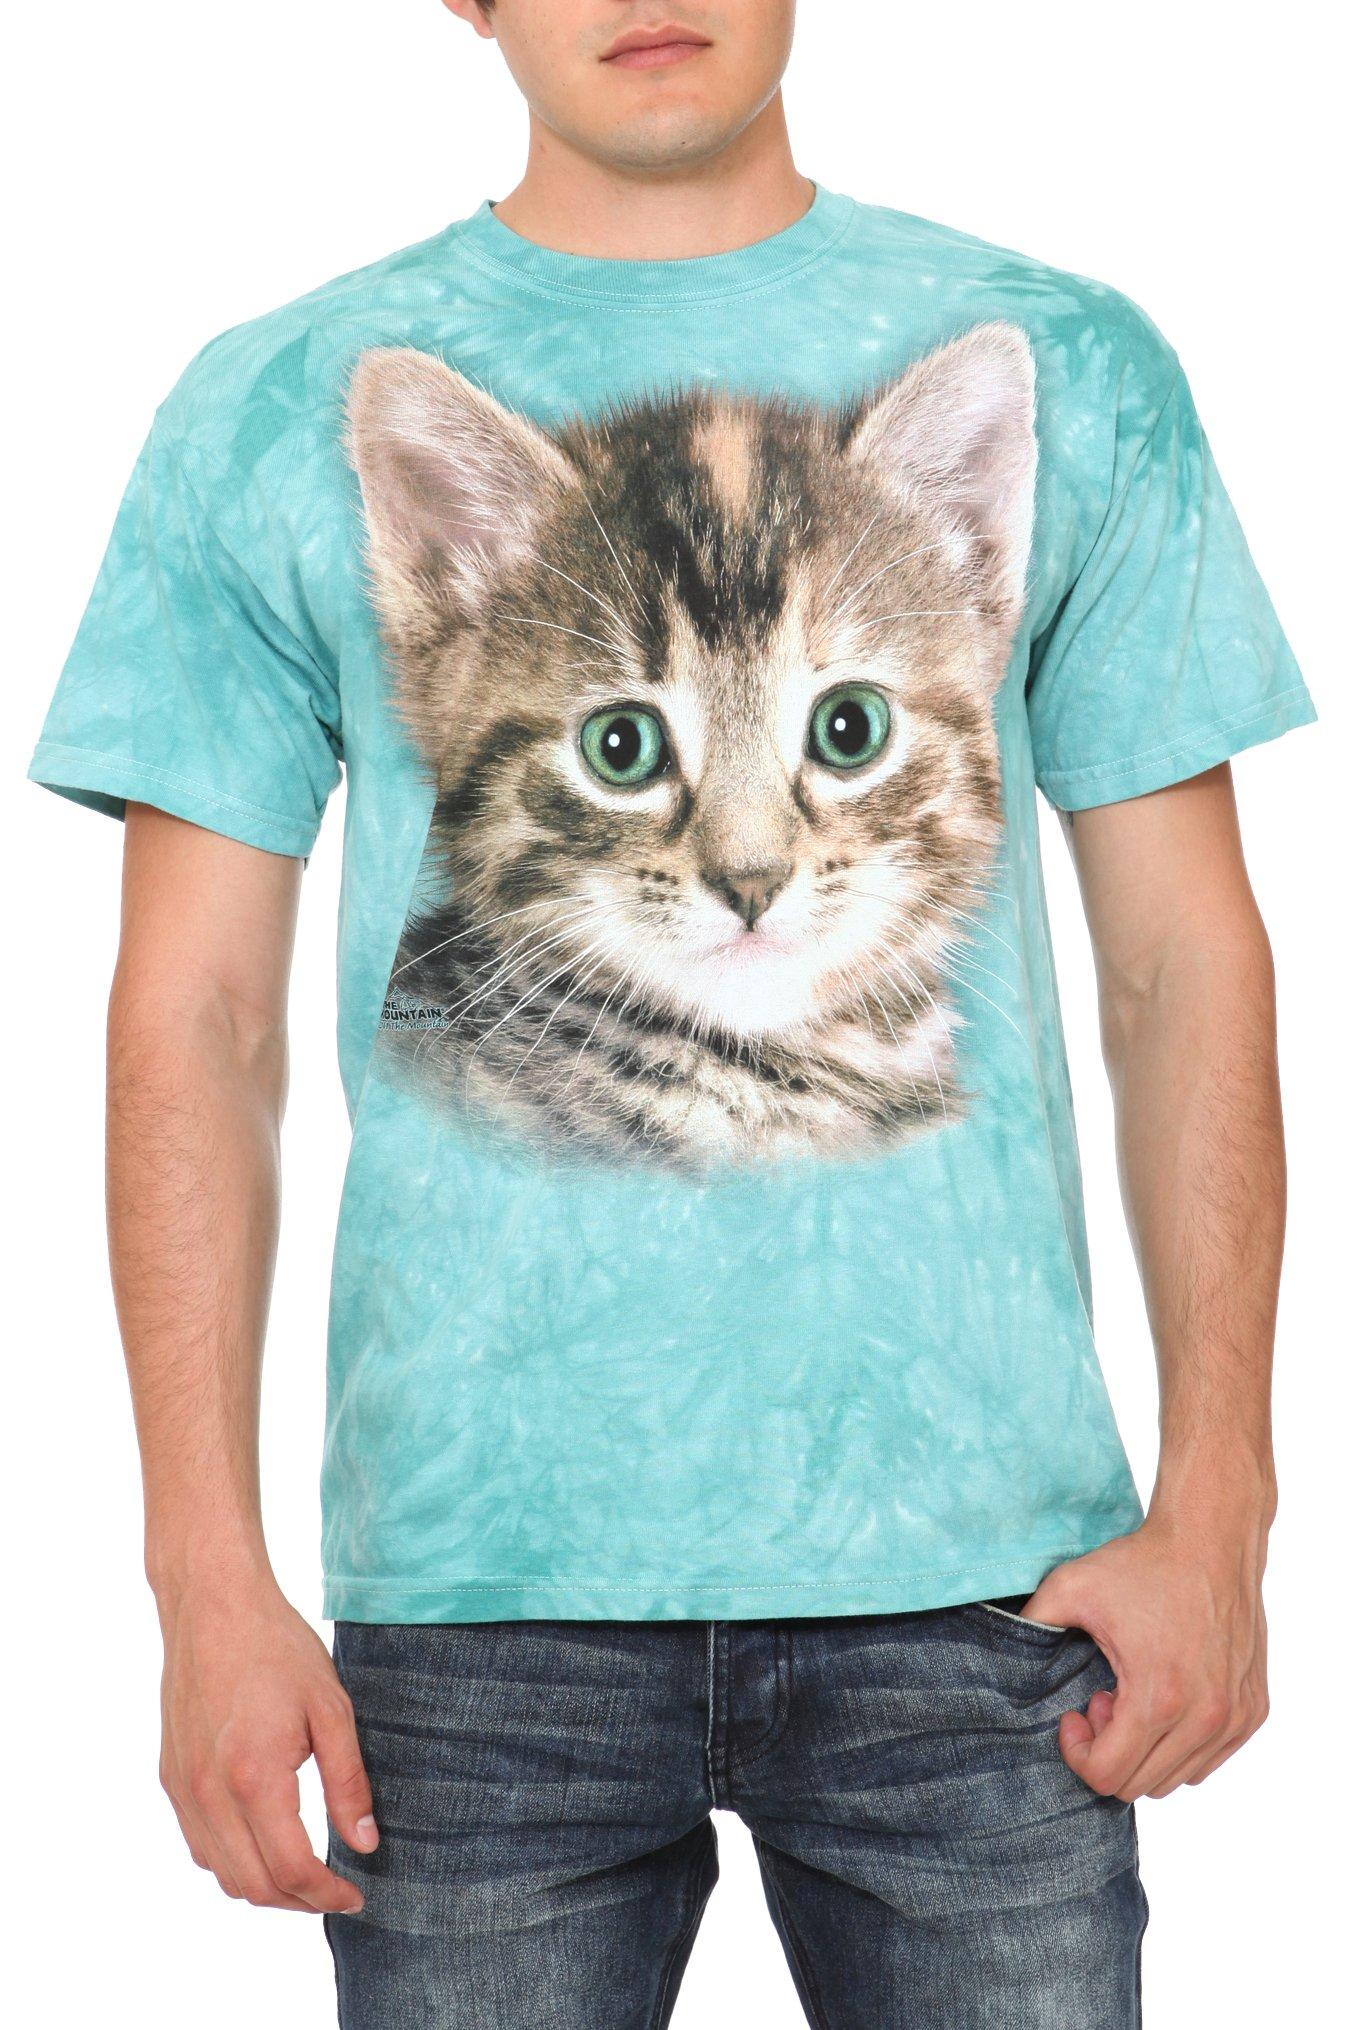 Tyler The Kitten T-Shirt | Hot Topic